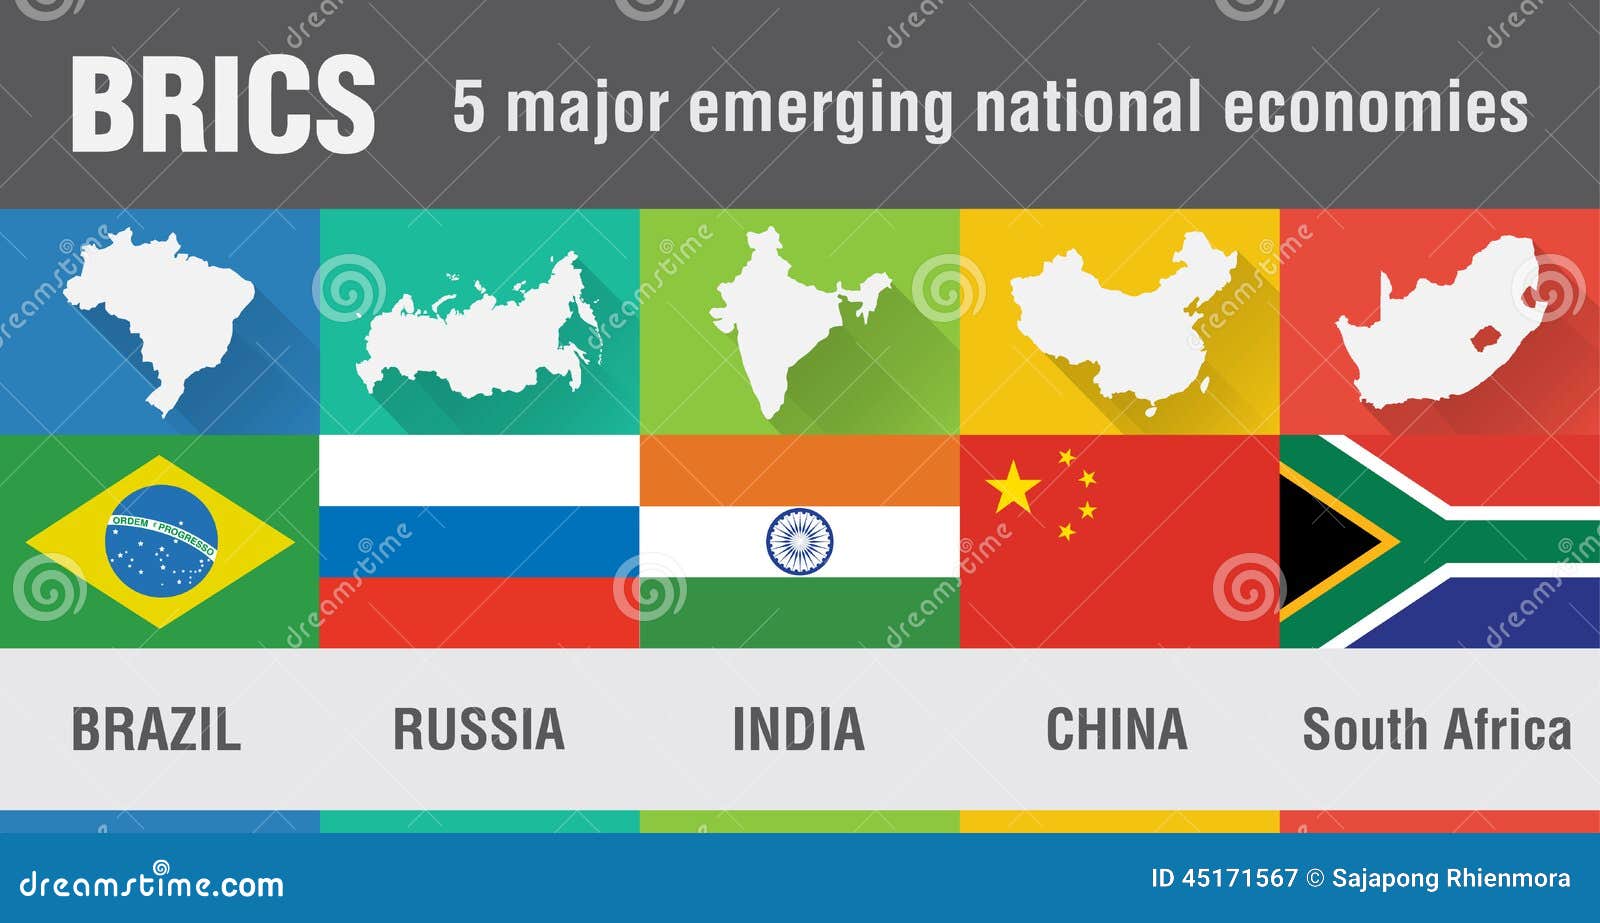 Brazil: Leading the BRICs? (TN)